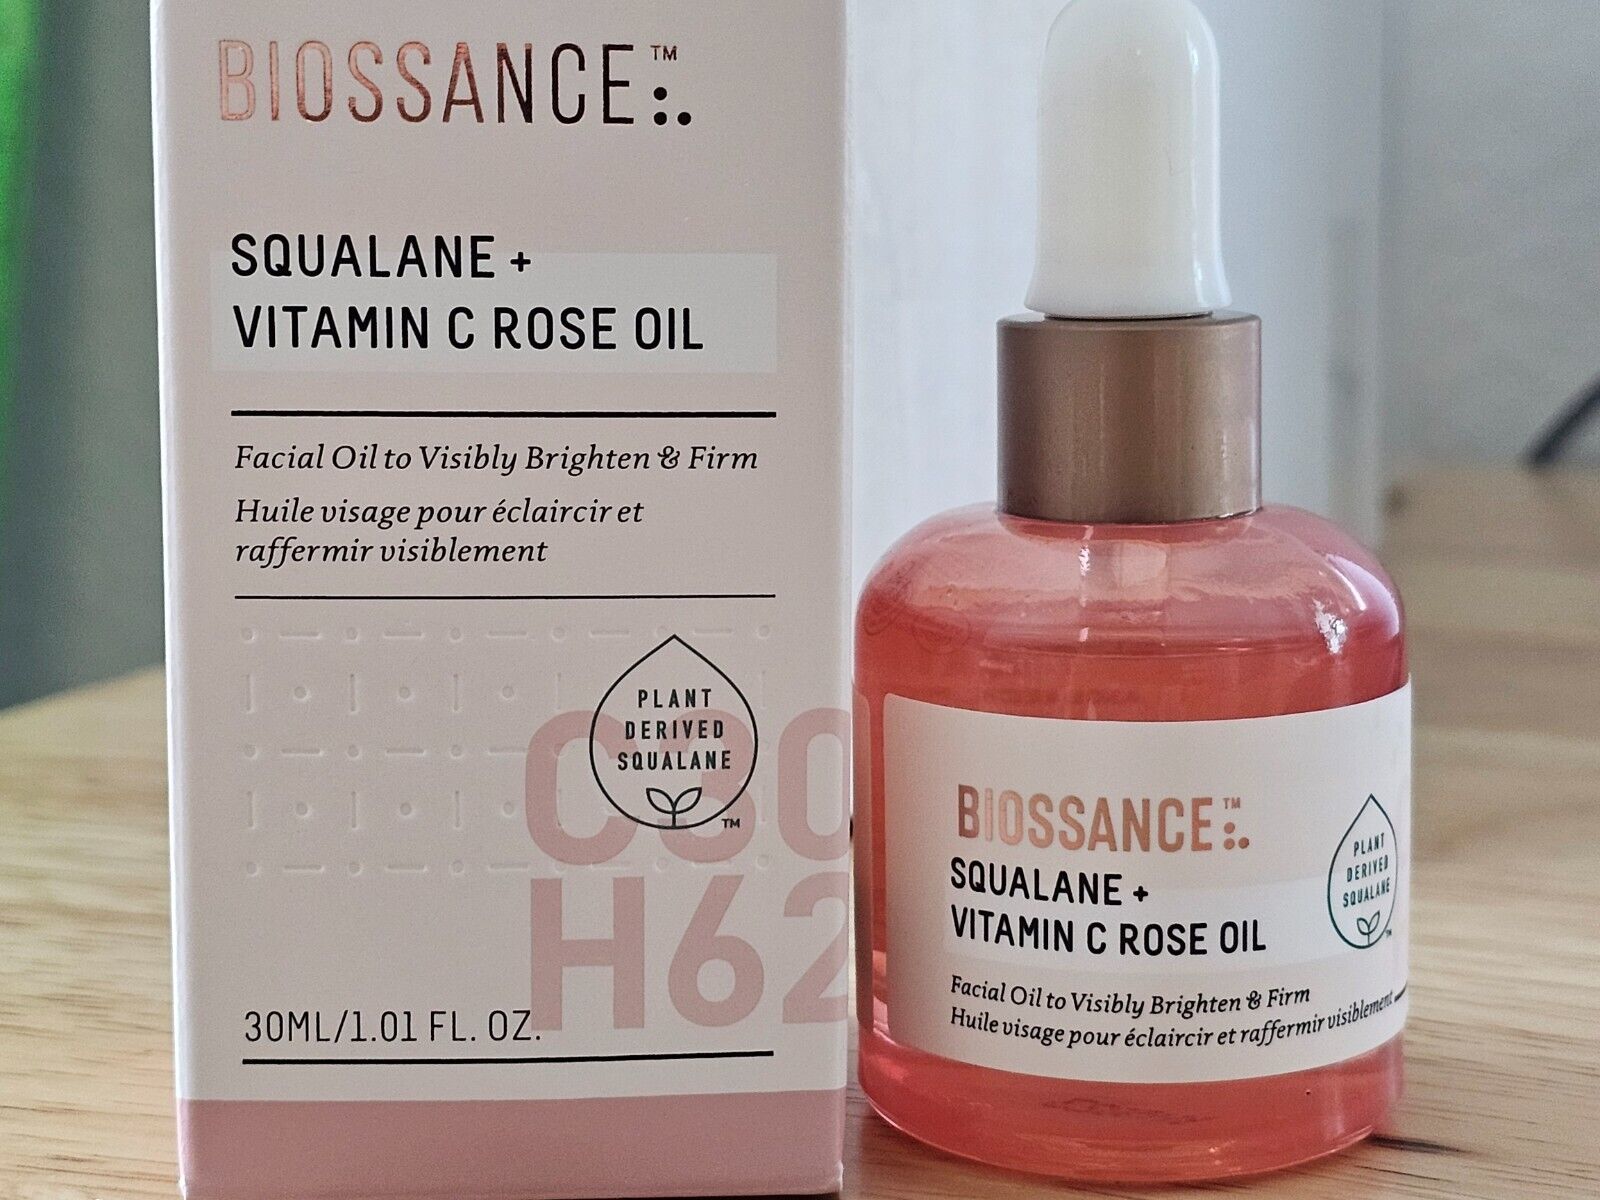 NEW Biossance Squalane + Vitamin C Rose Oil - 1.01 oz Brightens and firms BNIB